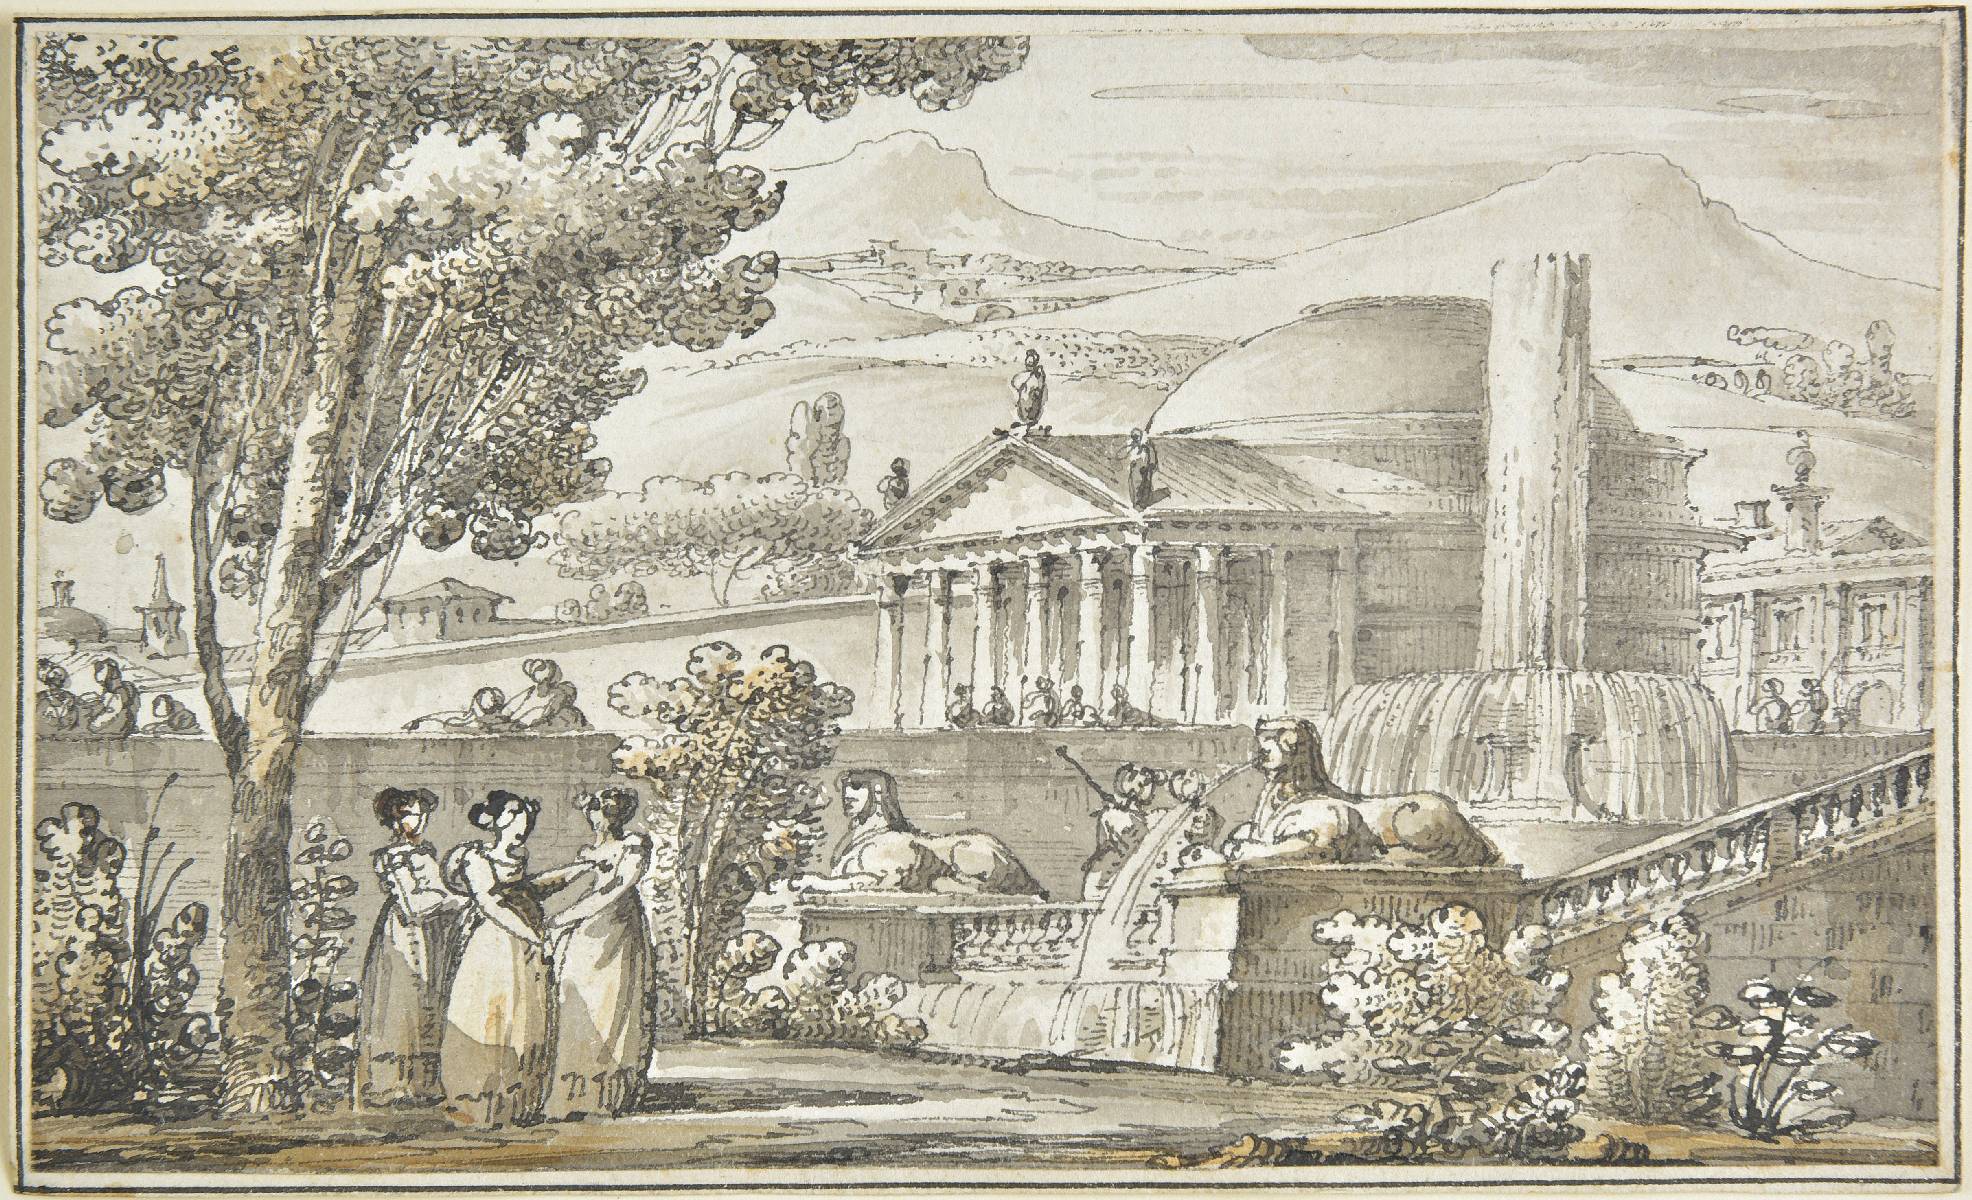 *Quarenghi (Giacomo, 1744-1817). Italian landscape capriccio, pen and black ink with grey and